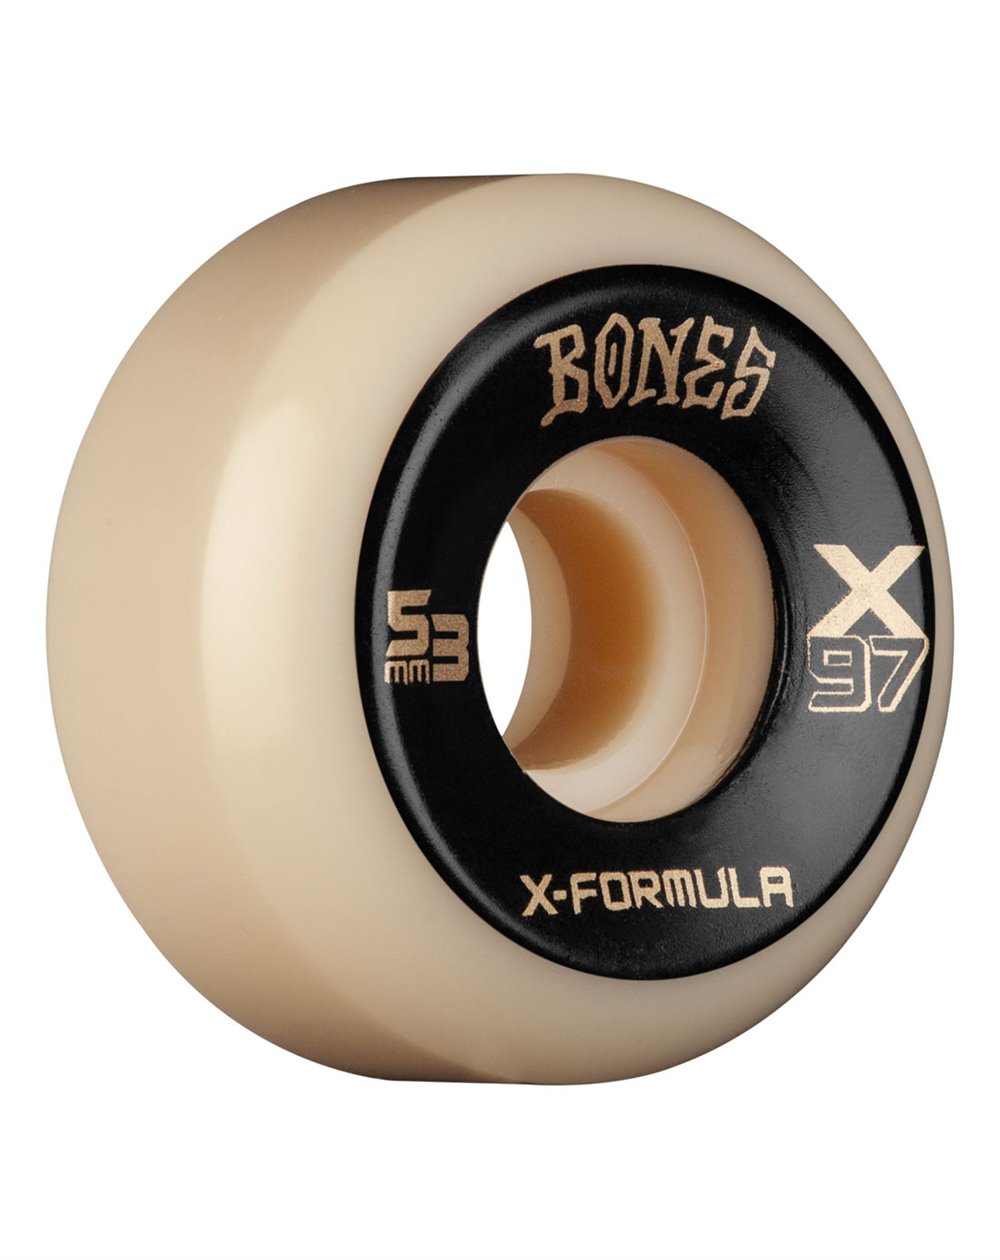 Bones Wheels Ruote Skateboard X-Formula V5 Sidecut X-Ninety-Seven 53mm 97A 4 pz